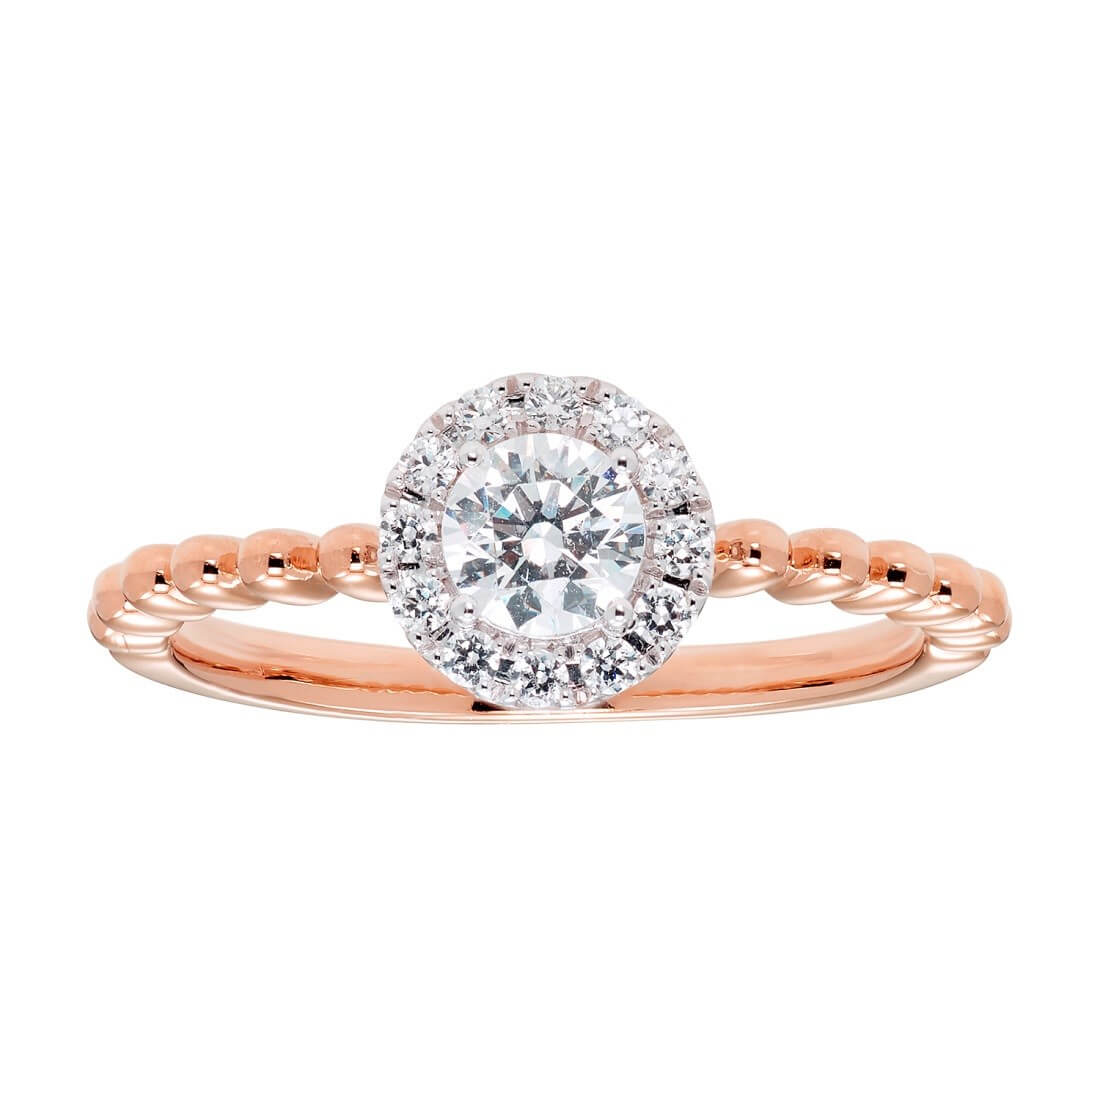 ¾ carat Diamond Engagement Ring